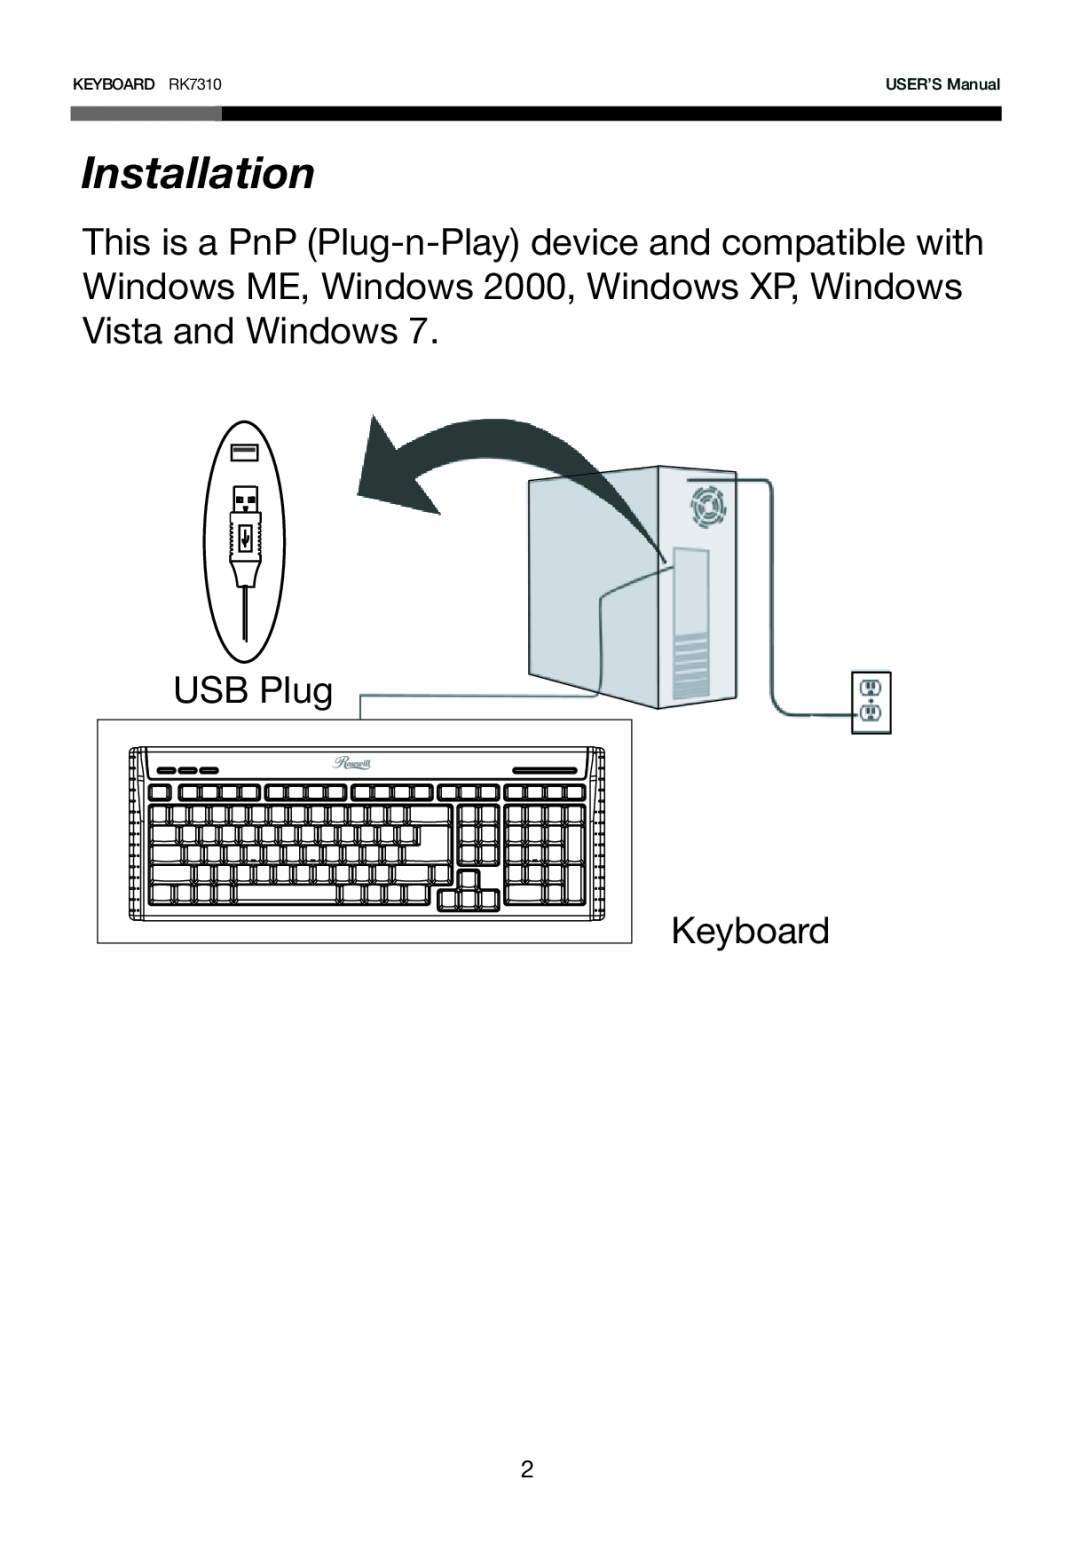 Rosewill RK-7310 user manual Installation, USB Plug Keyboard, KEYBOARD RK7310, USER’S Manual 